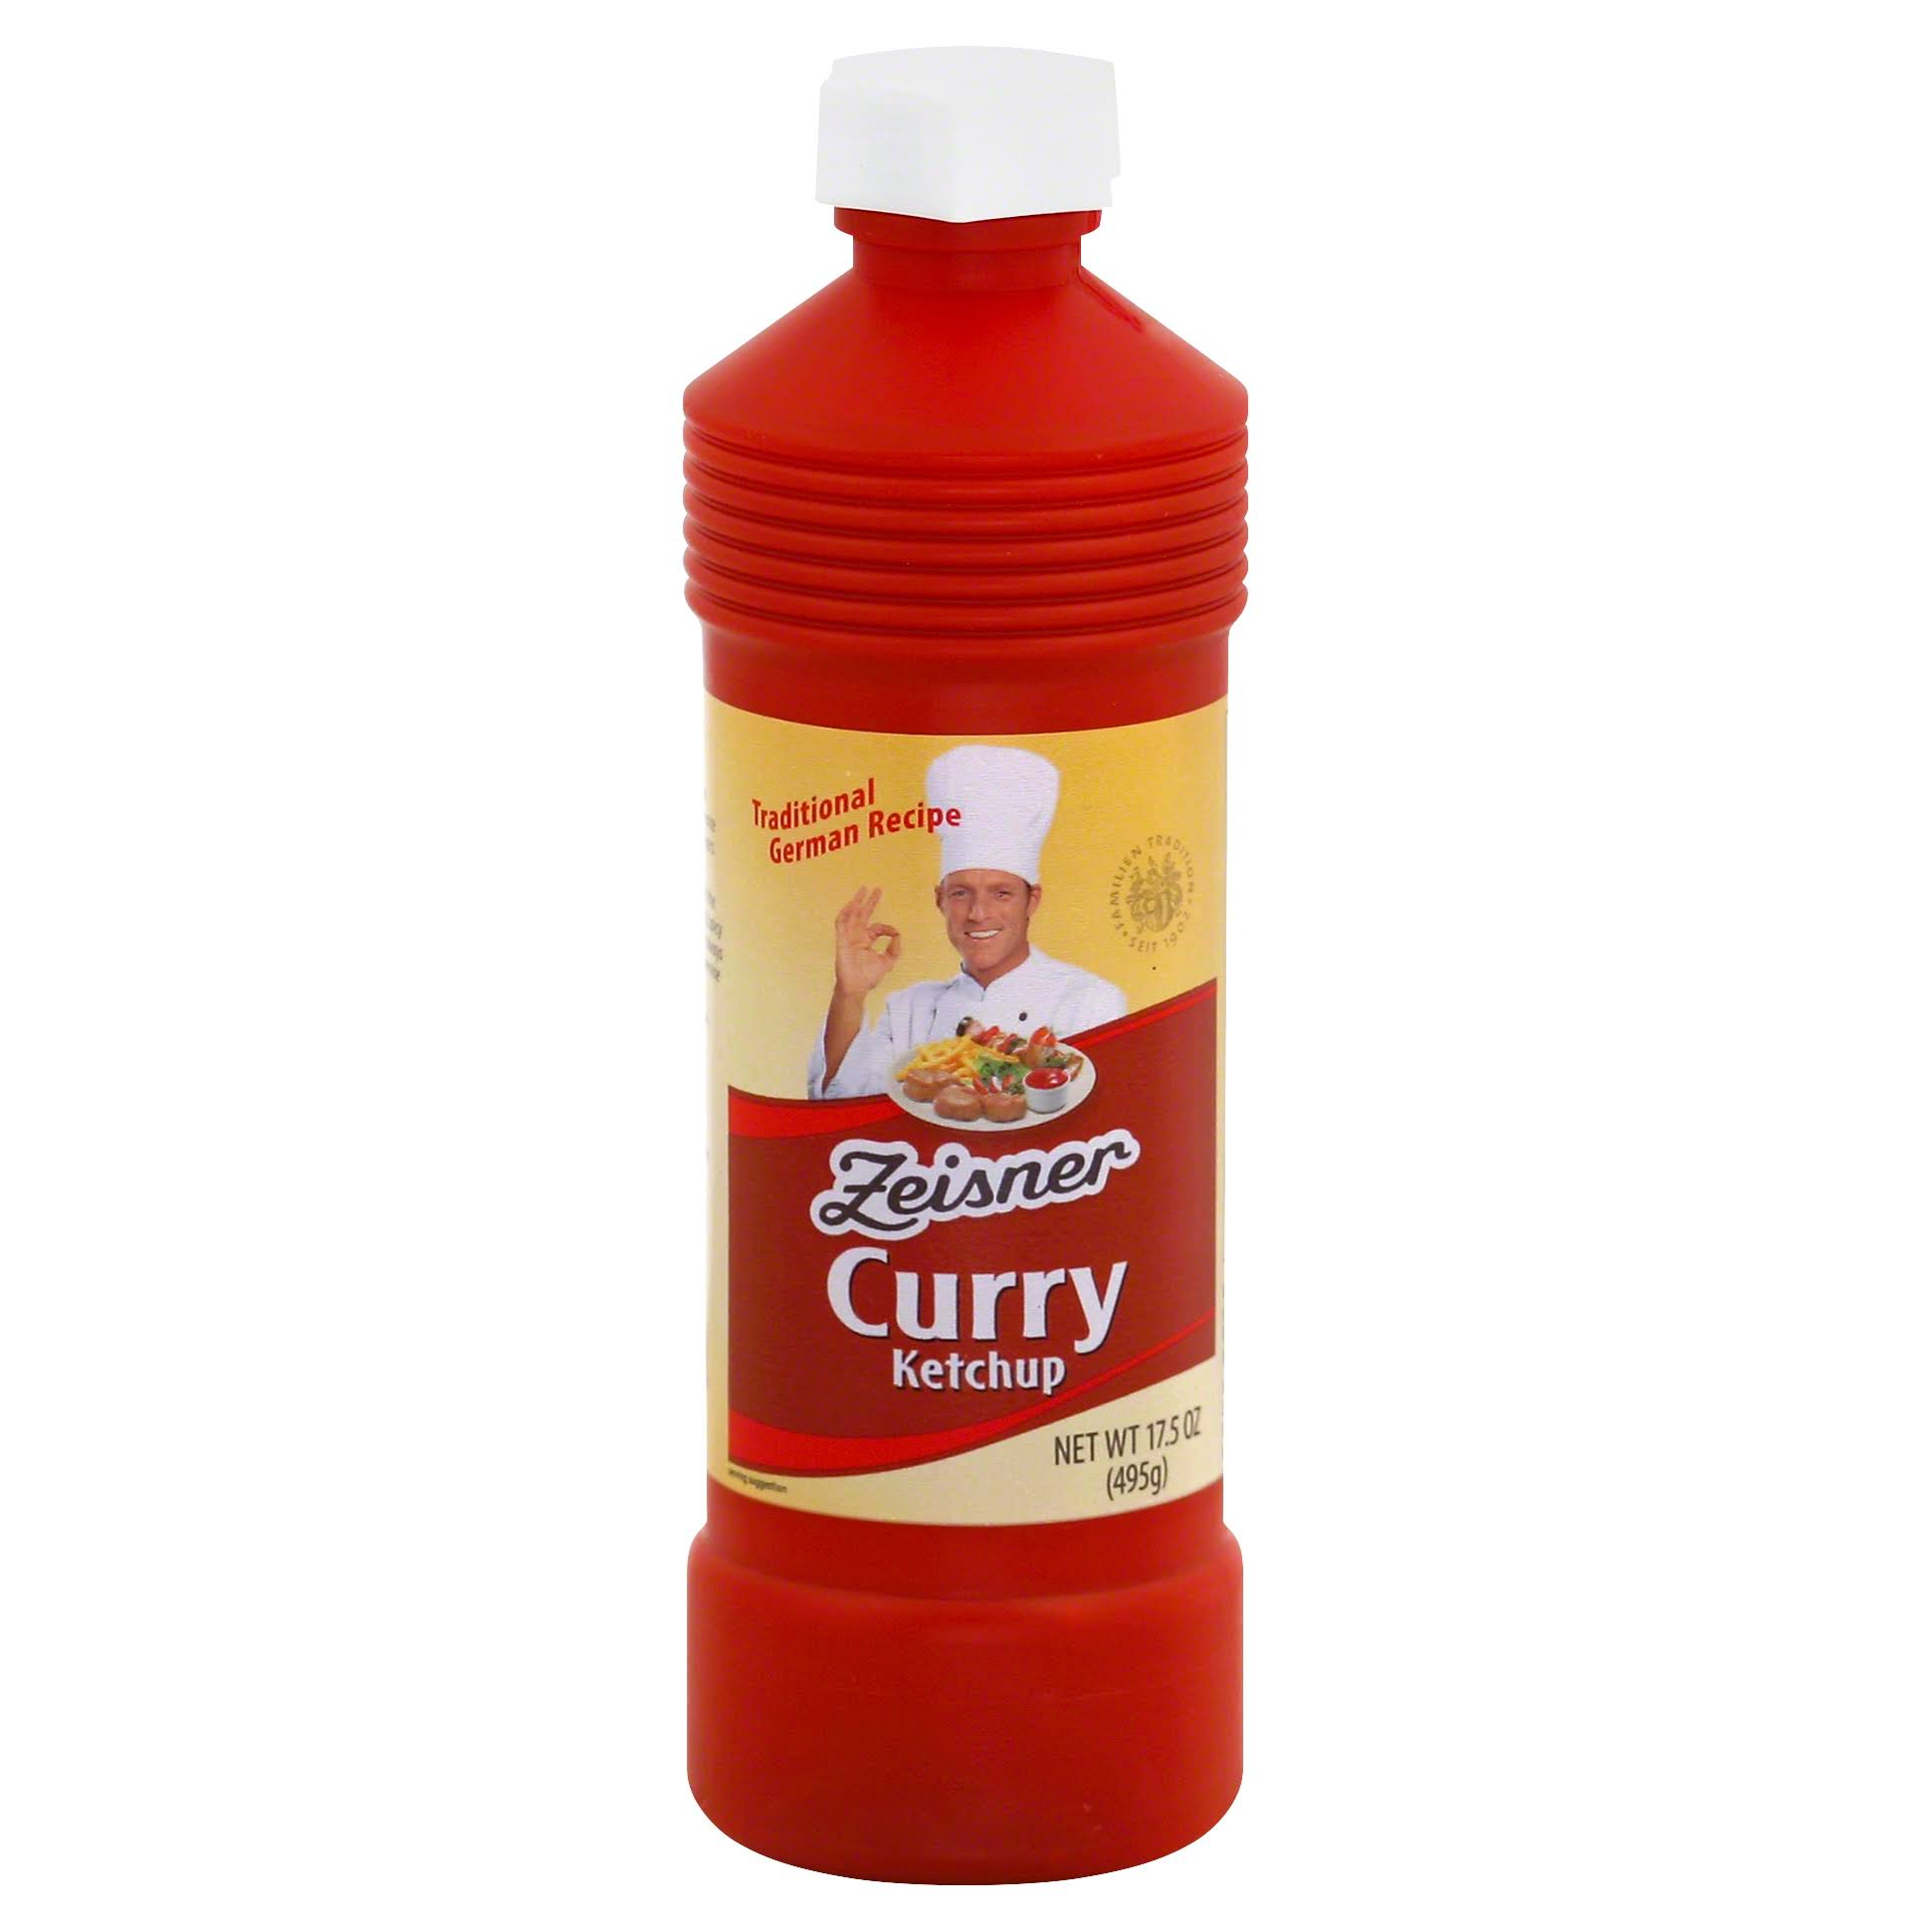 Zeisner Curry Ketchup